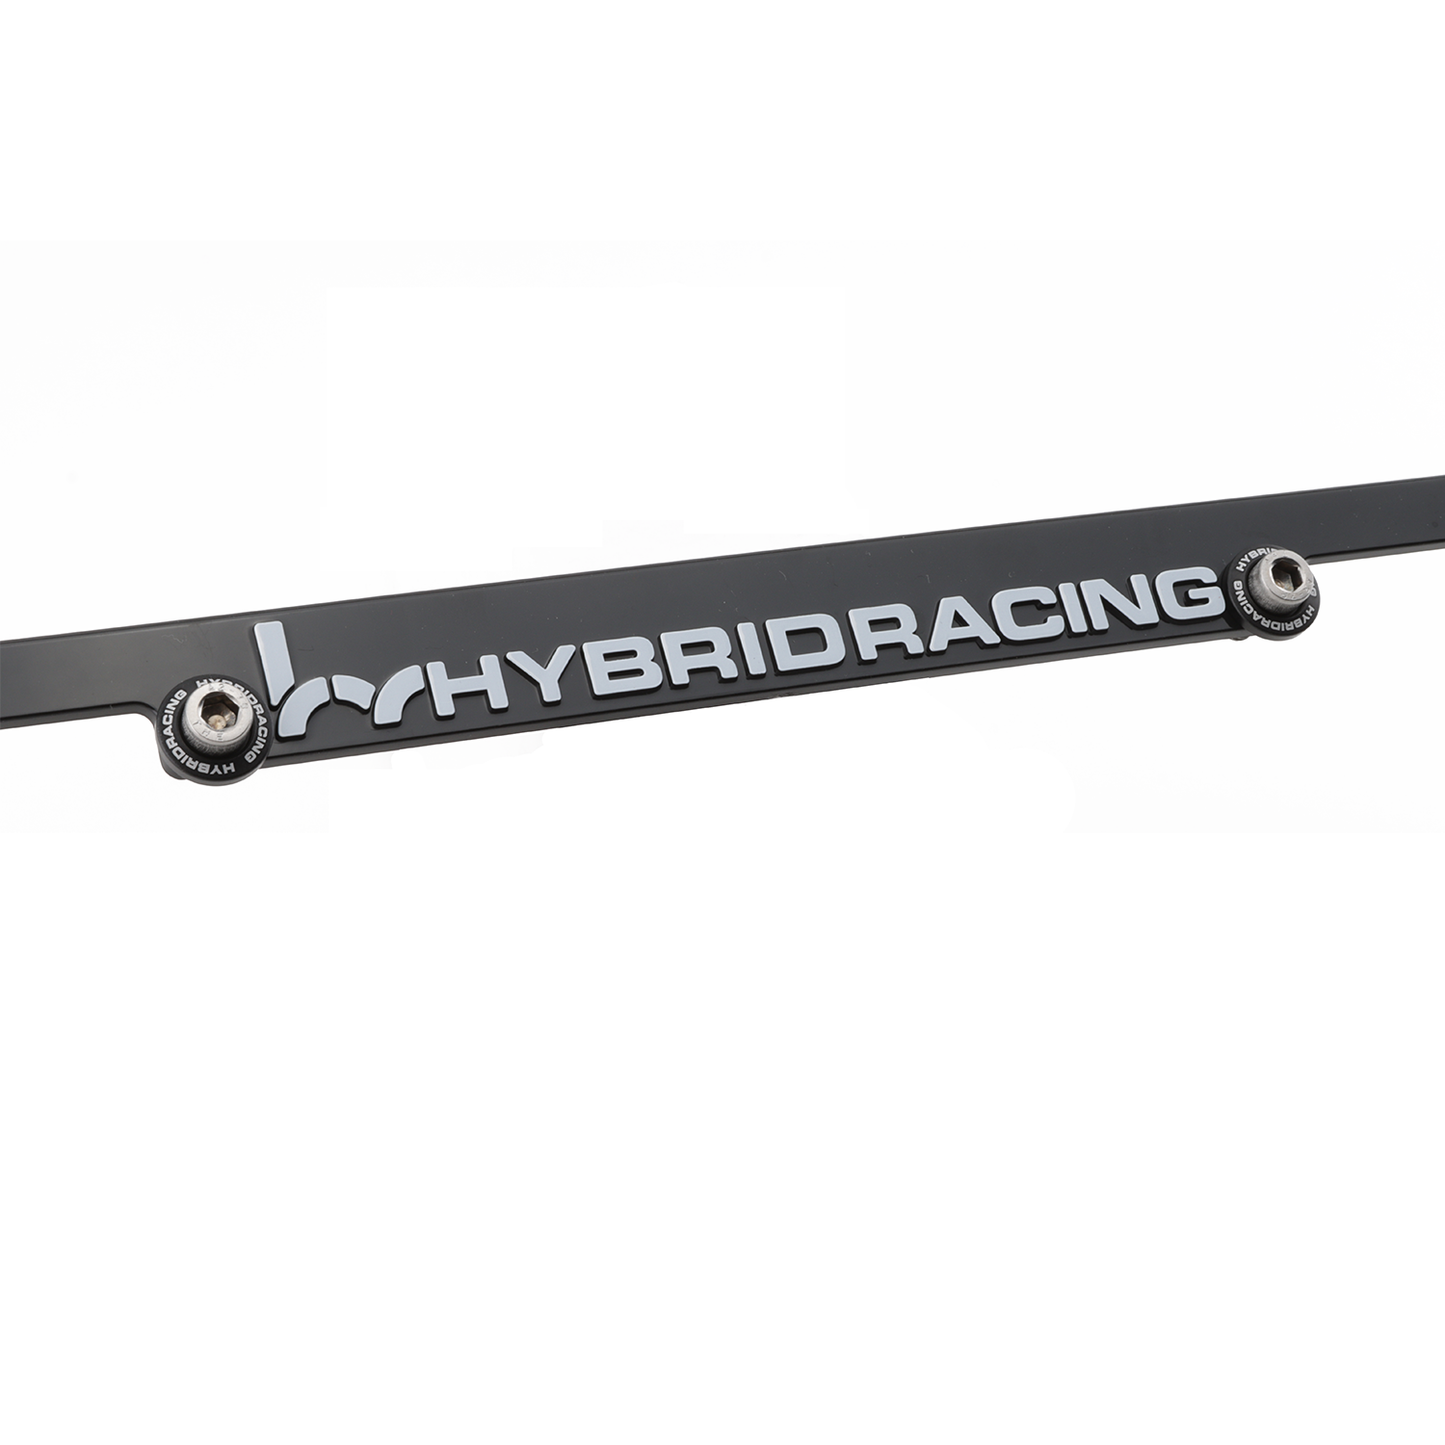 Hybrid Racing - M6X1.0 Accessory Hardware Kit